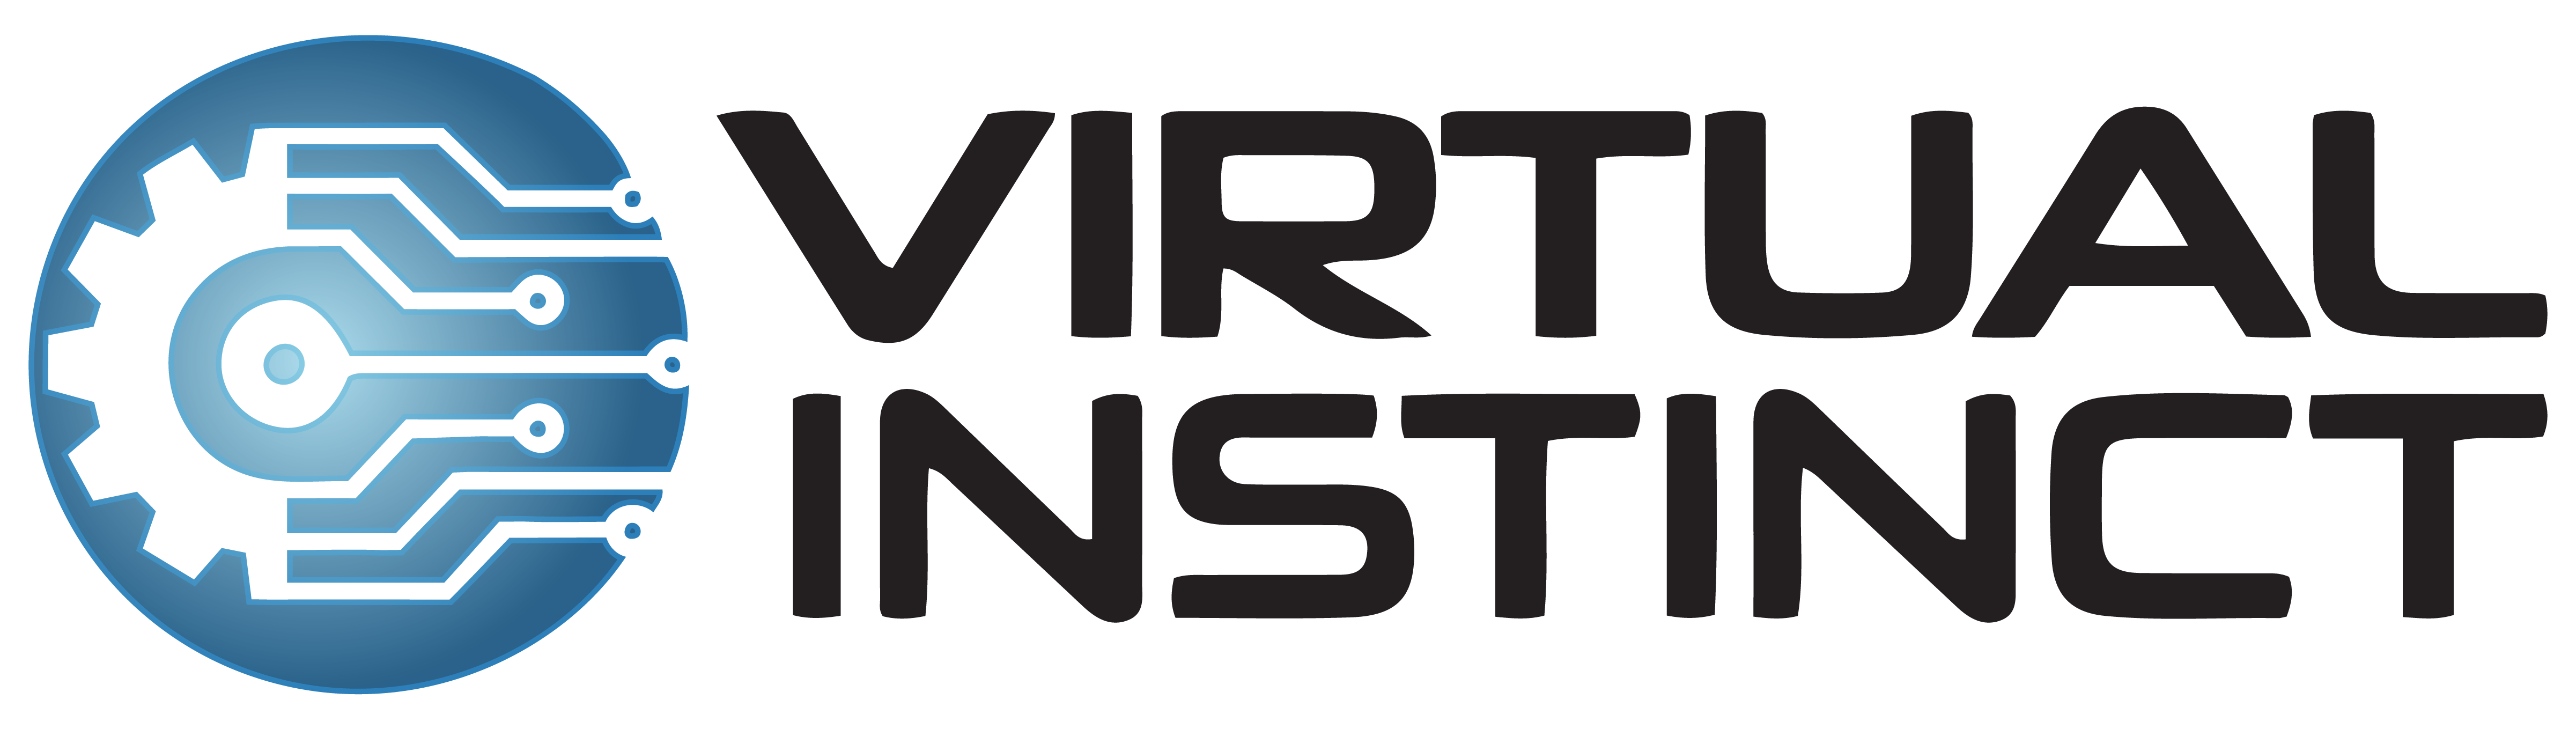 Virtual Instinct-01-1